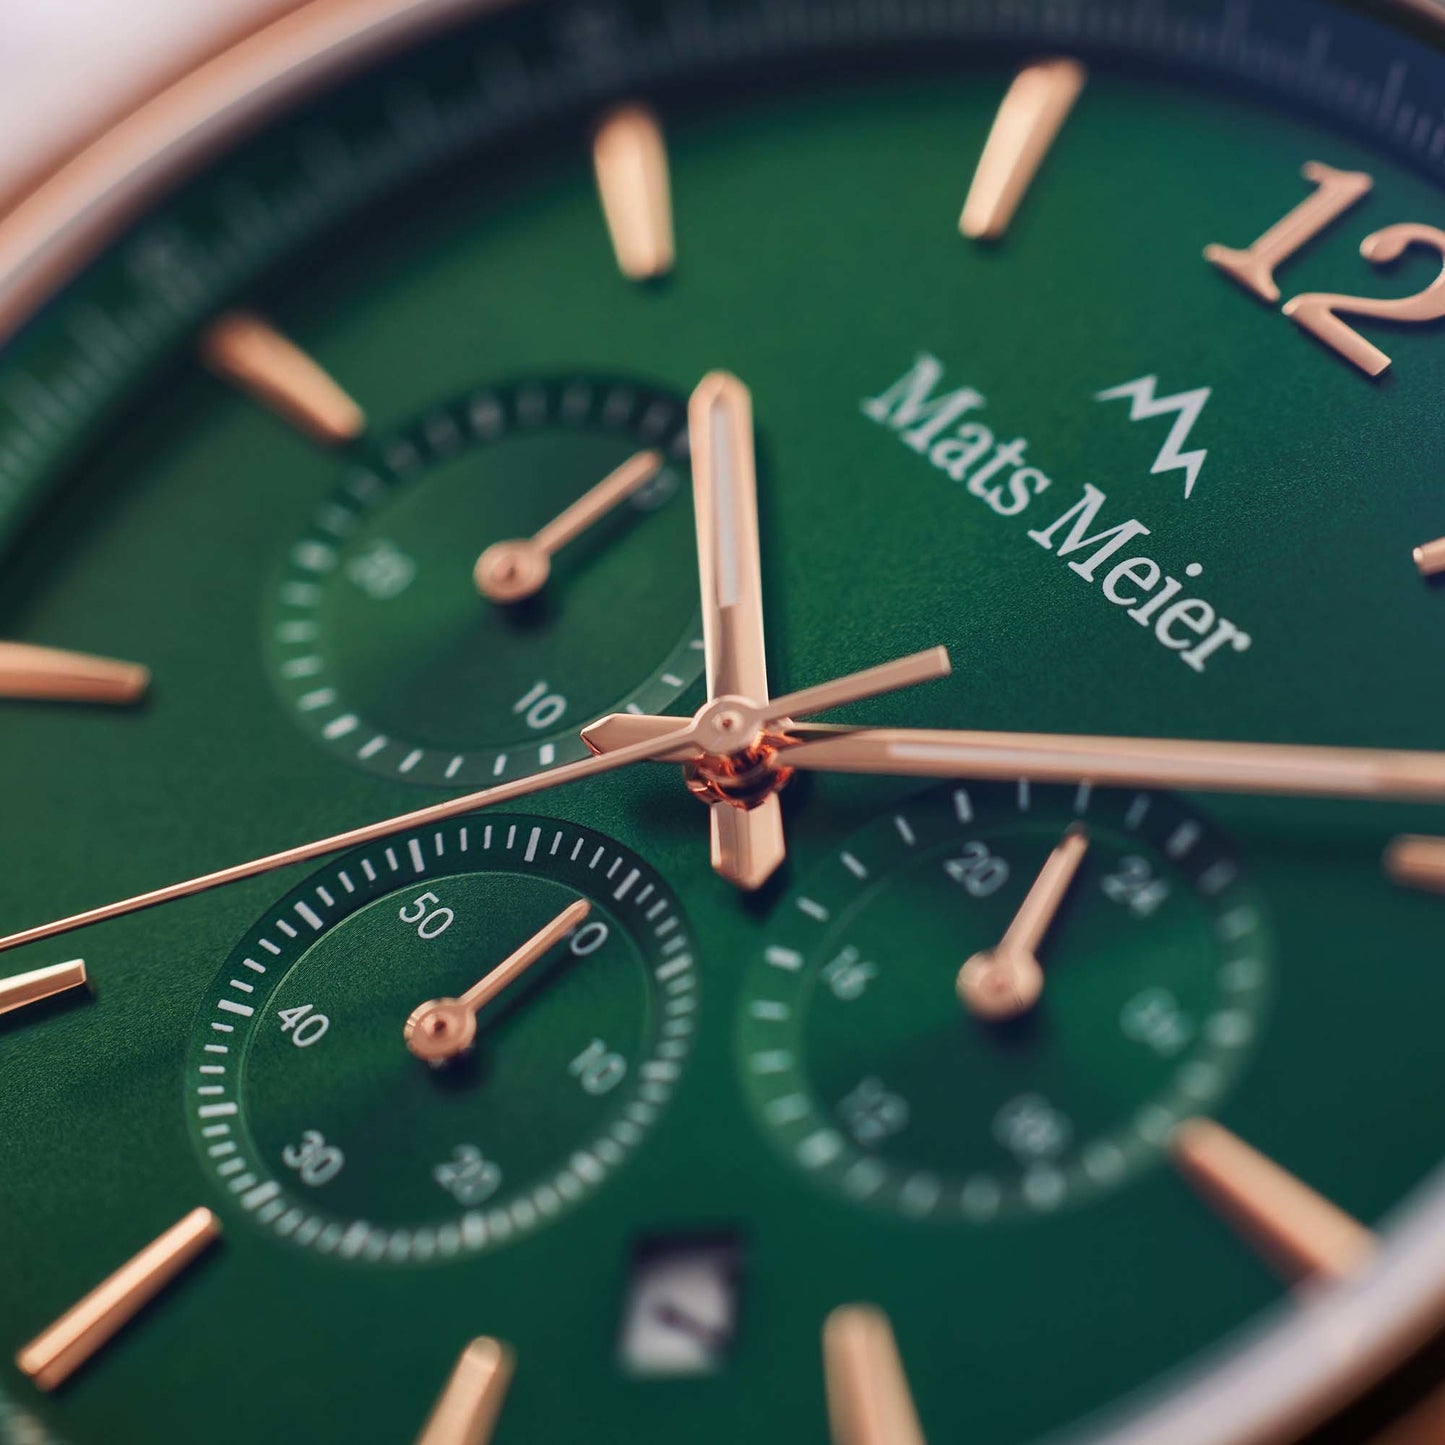 Grand Cornier chronograaf herenhorloge bruin en groen